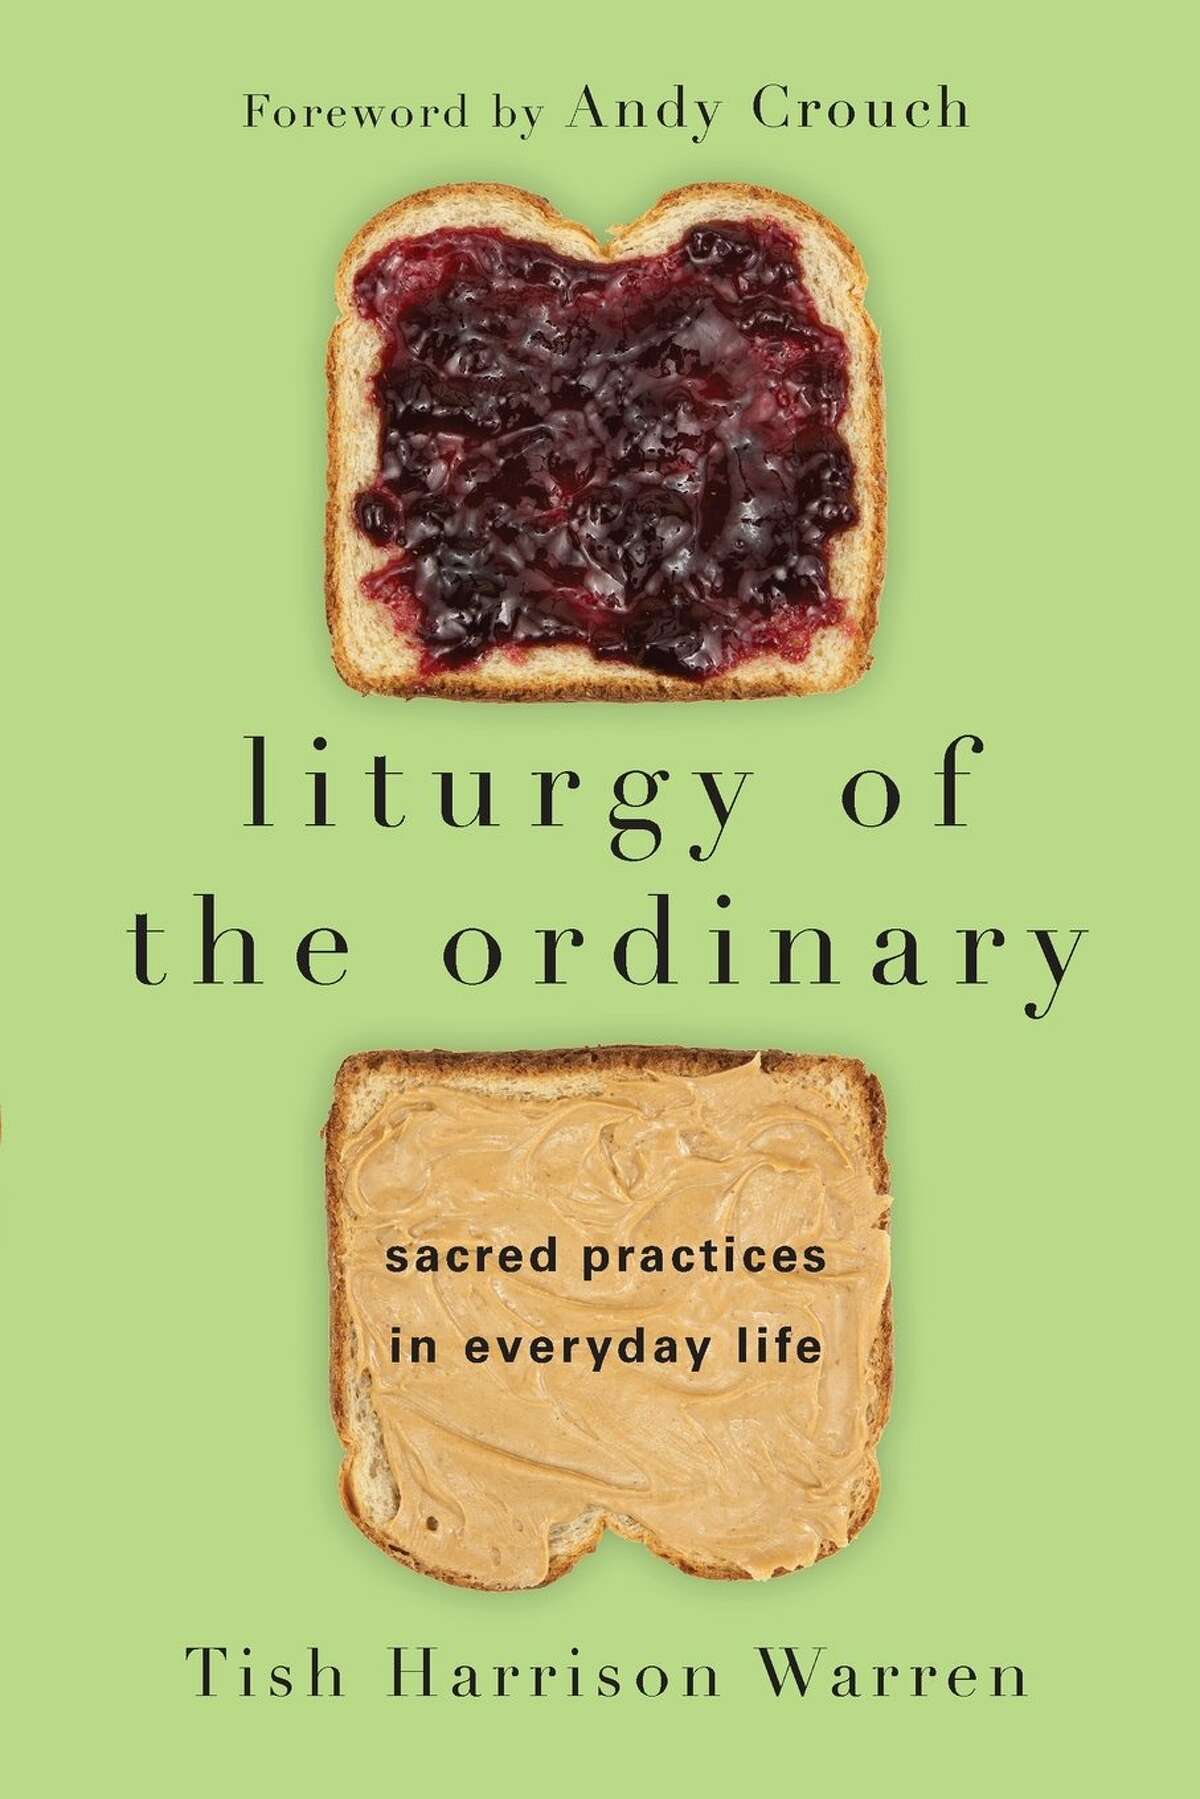 "Liturgy of the Ordinary" by Tish Harrison Warren